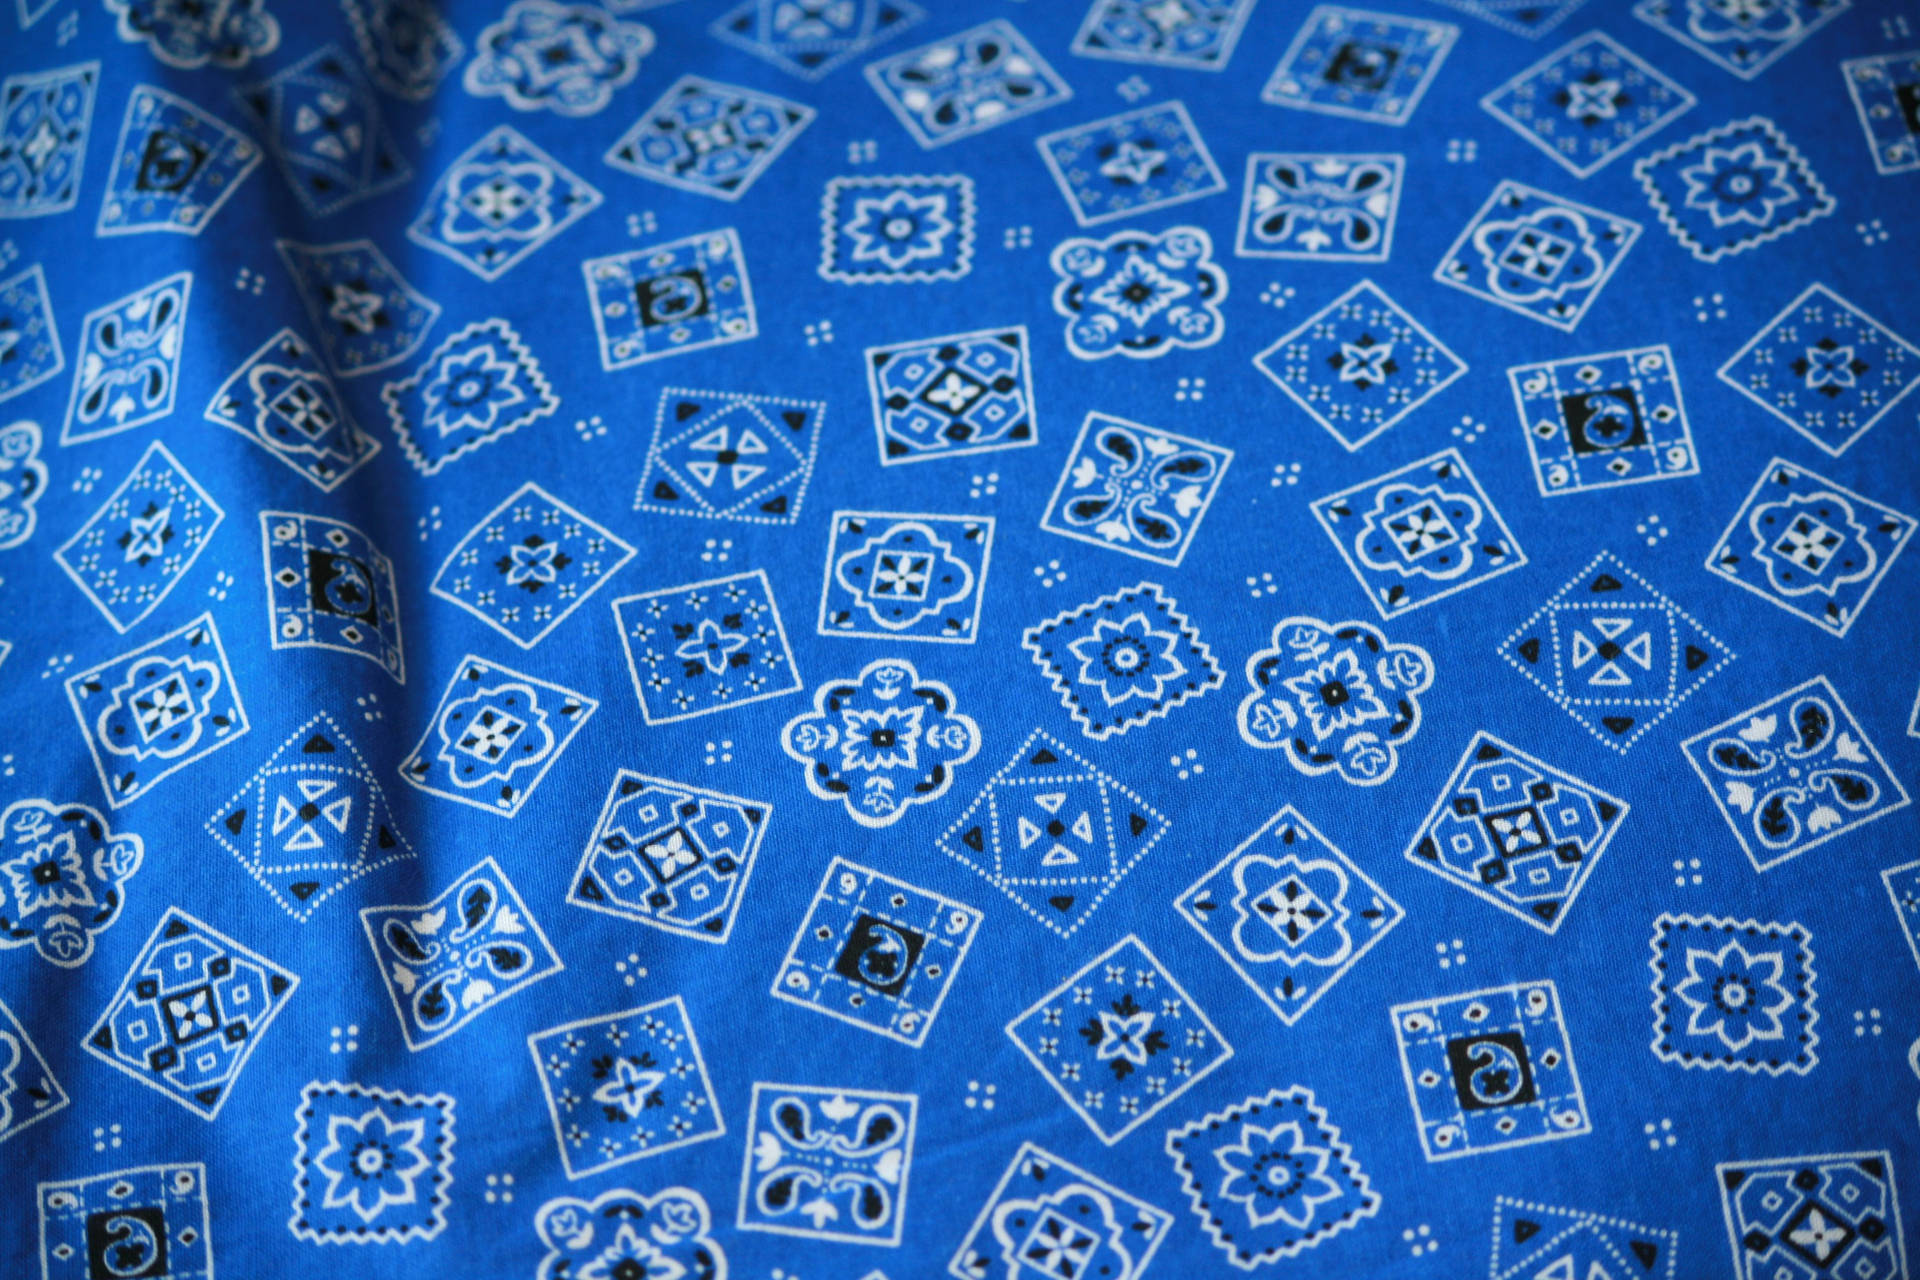 Stunning Intricate Blue Bandana Design